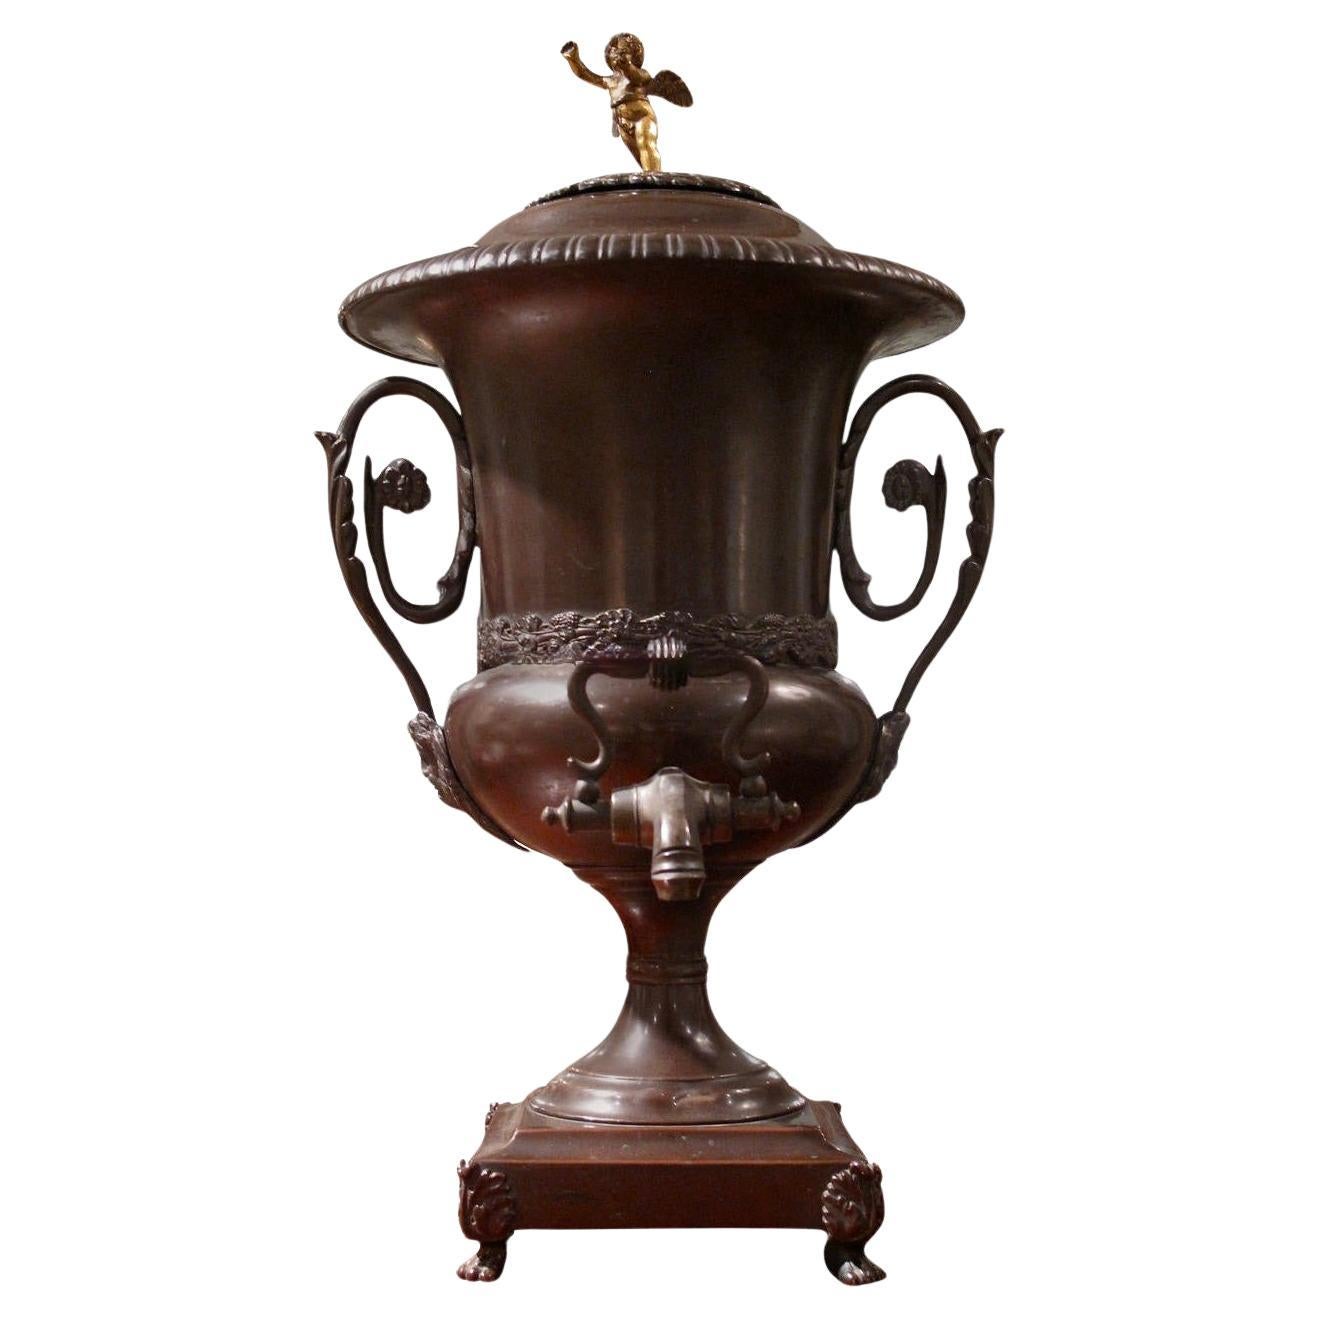 English Antique Regency Period Copper Hot Water Urn (Samovar) For Sale